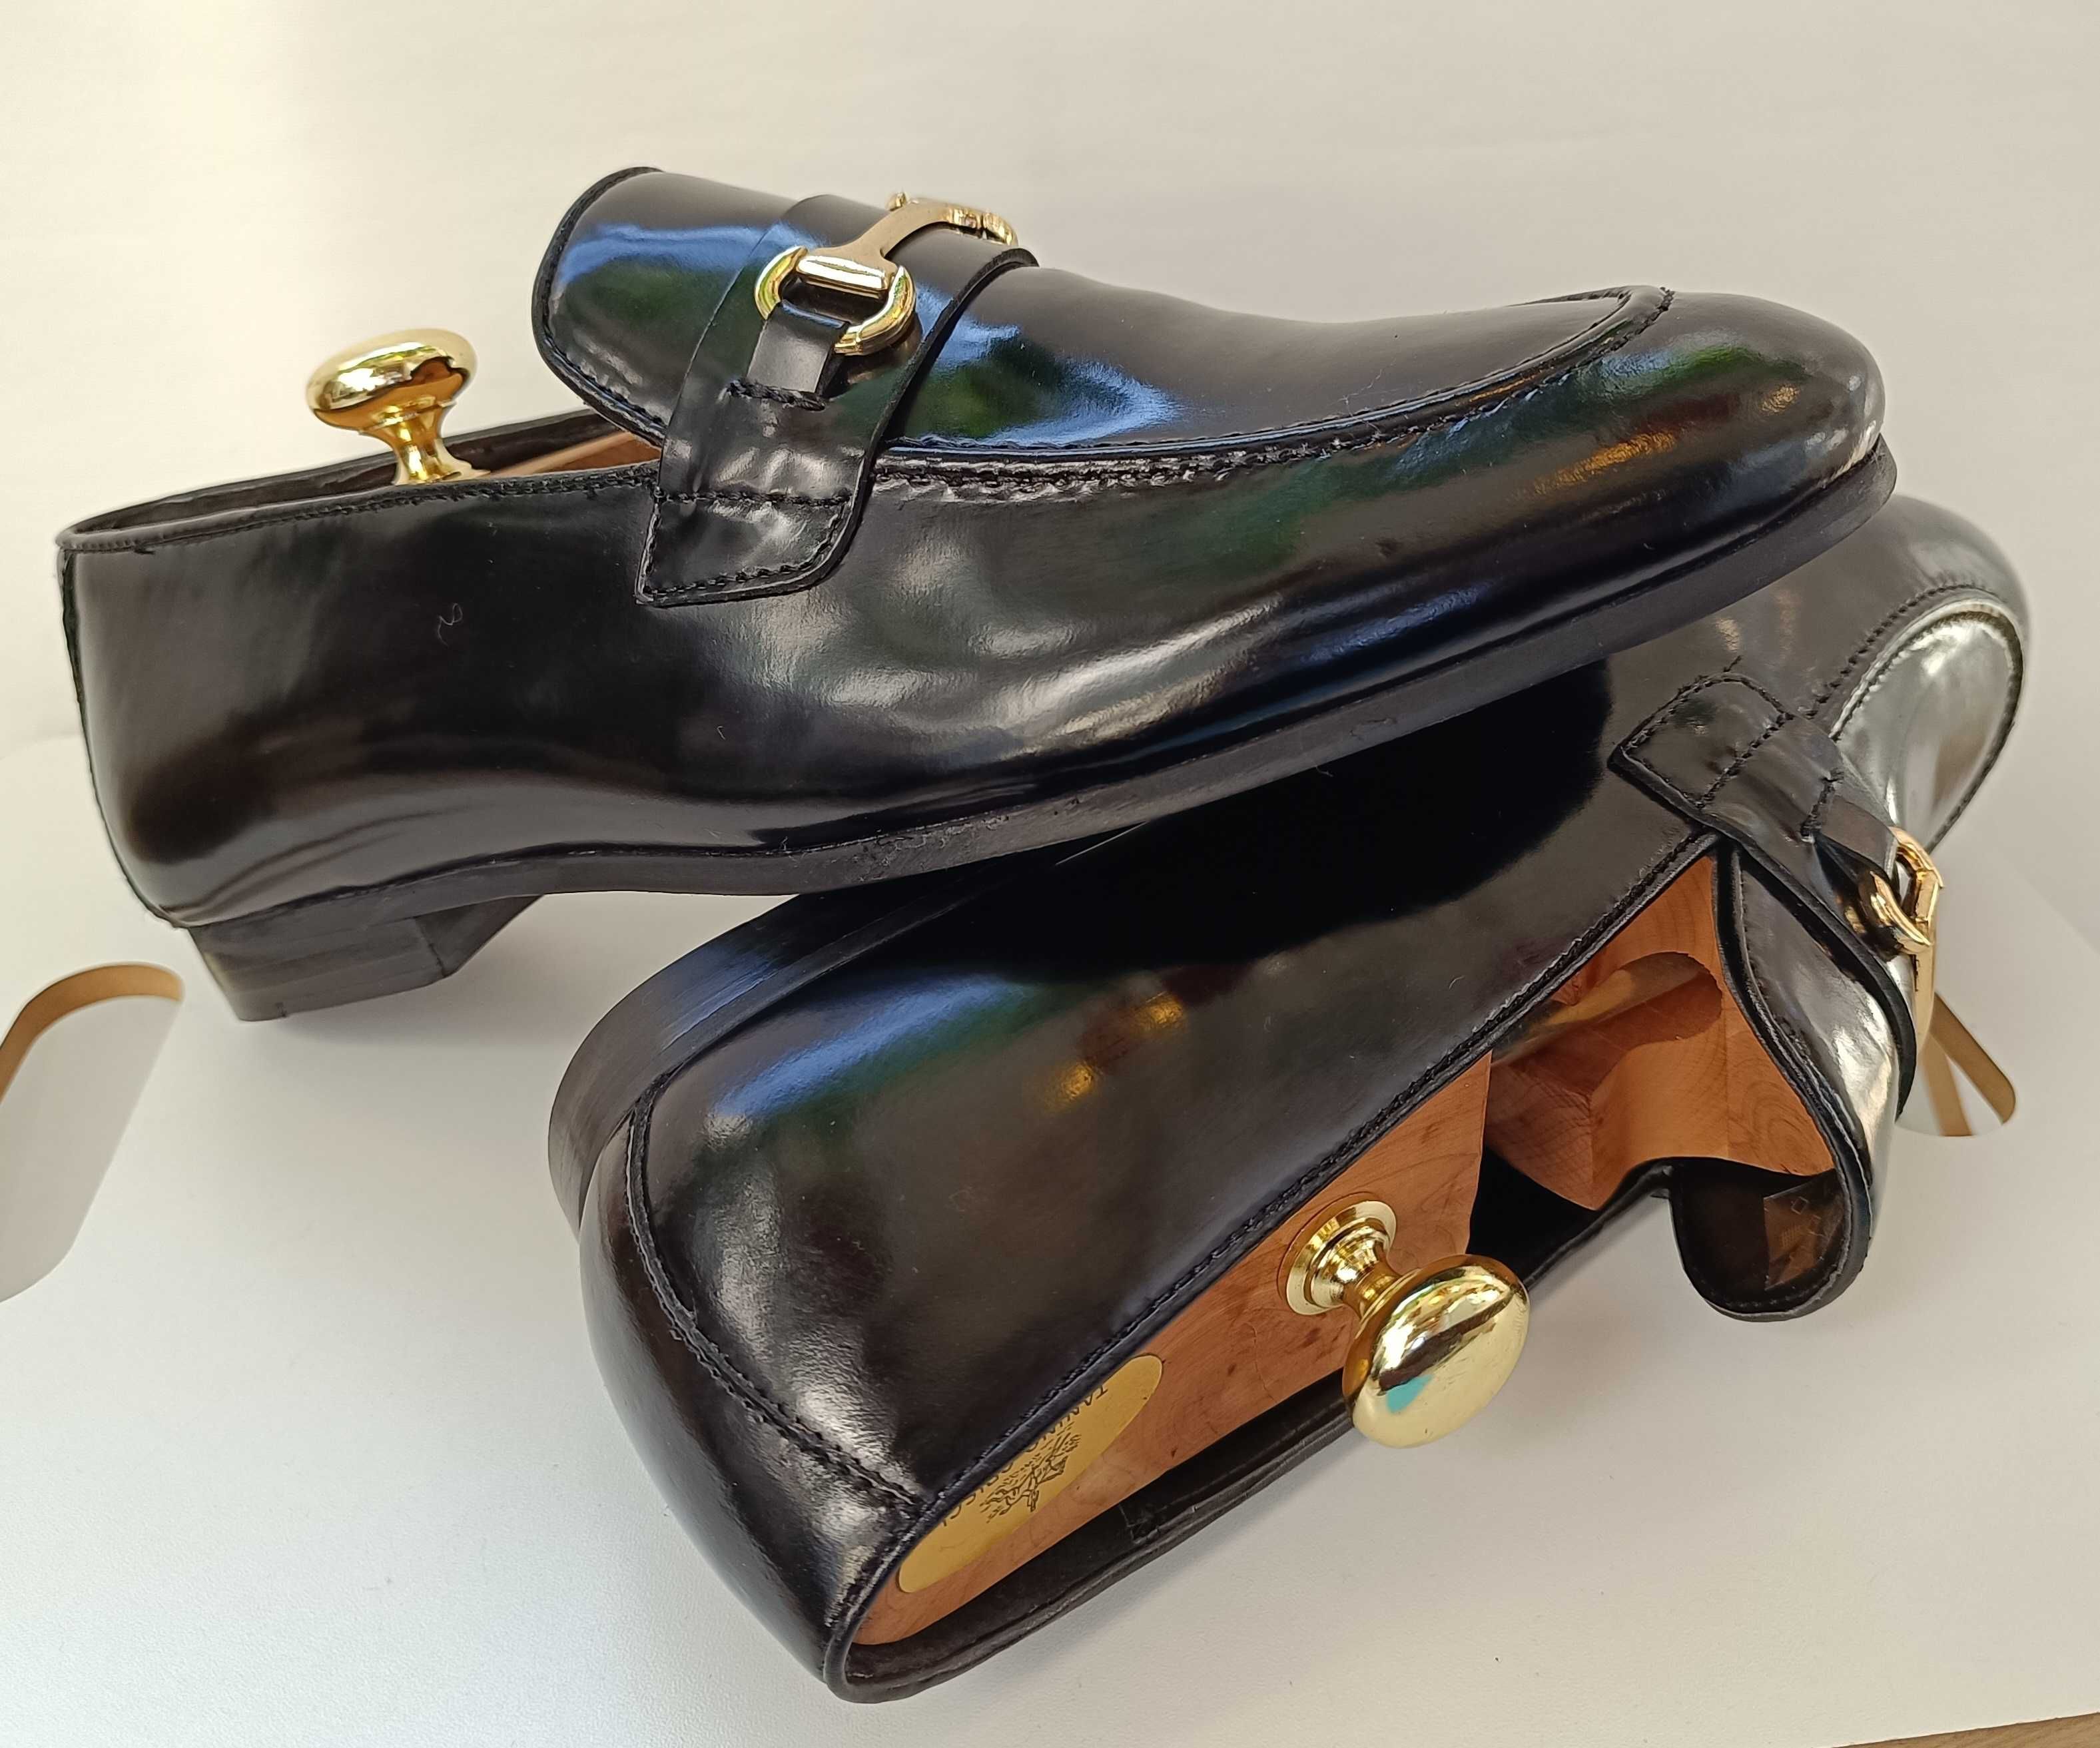 Pantofi loafer 43 bit premium Walk London NOI piele naturala lustruita